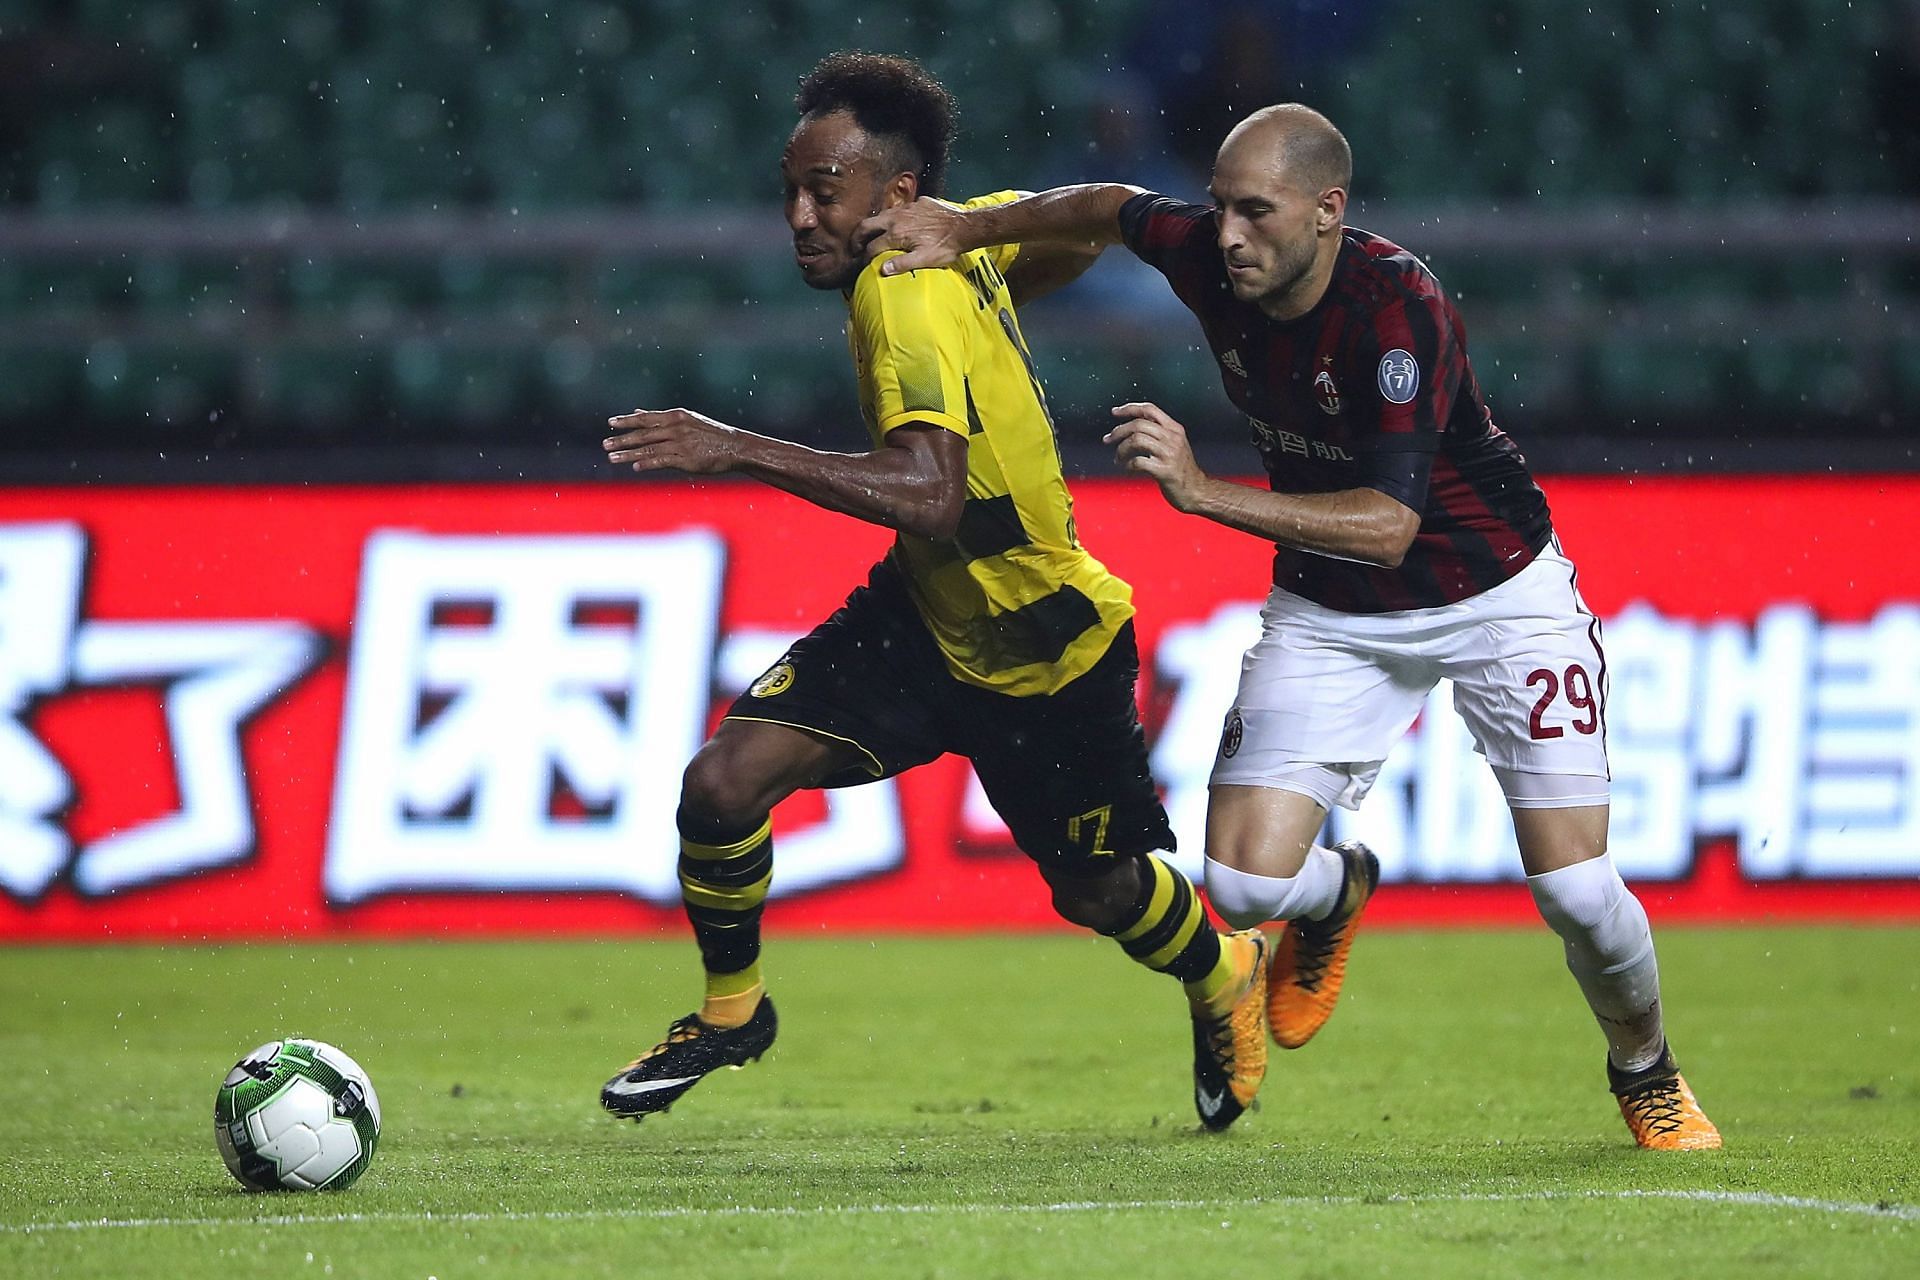 Pierre-Emerick Aubameyang was a goal-scoring machine at Borussia Dortmund